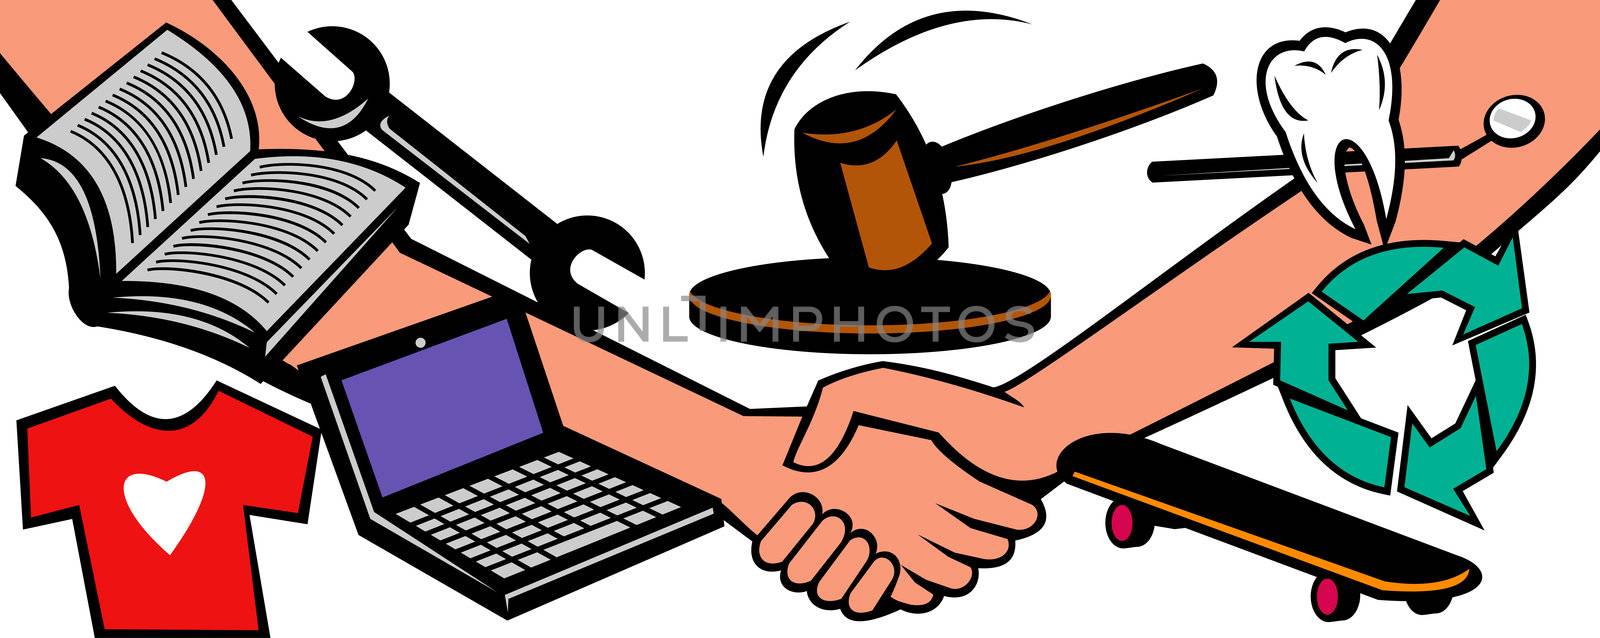 auction items handshake deal swap exchange by patrimonio